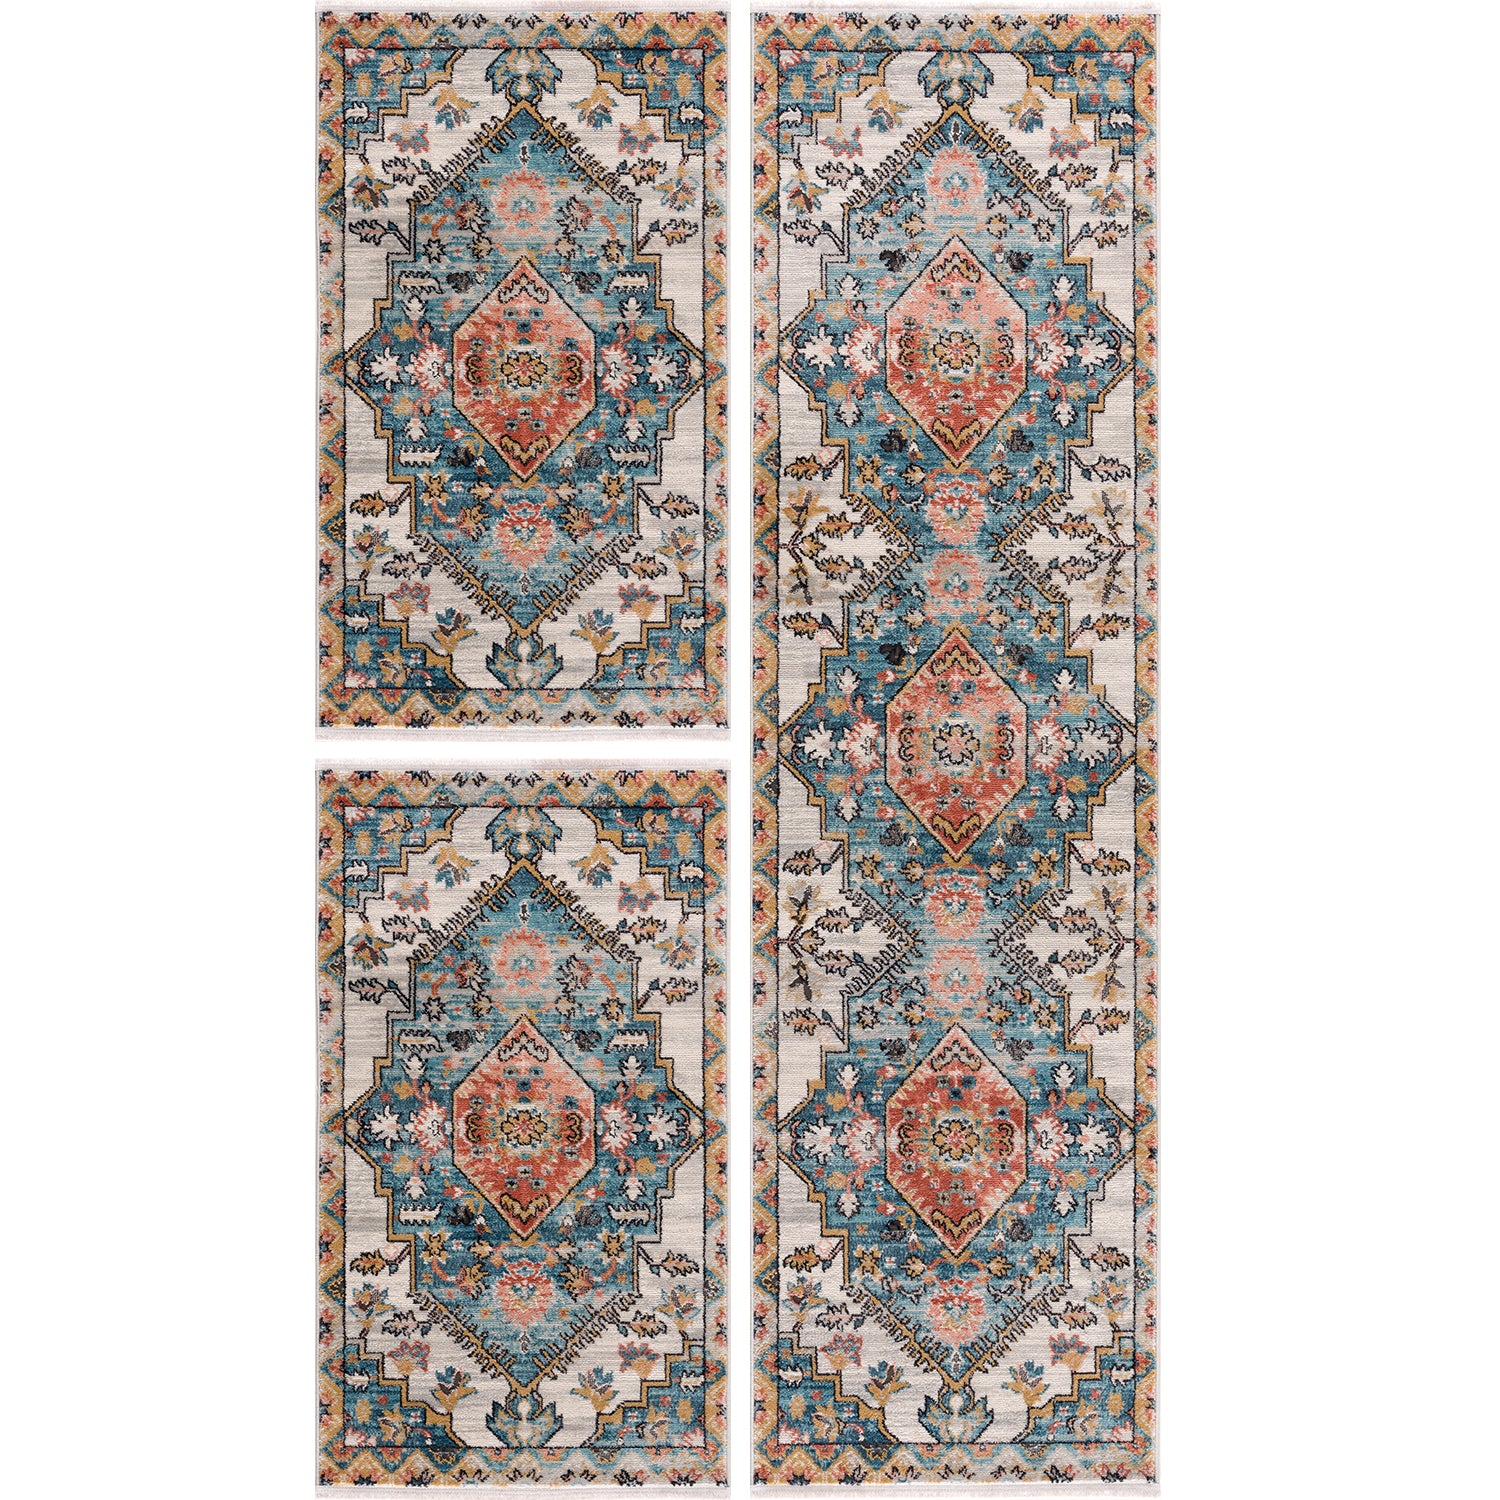 la dole rugs traditional bordered navajo vintage teal turquoise ivory red orange area rug 9x12, 10x13 ft Large Big Carpet, Living Room, Beroom